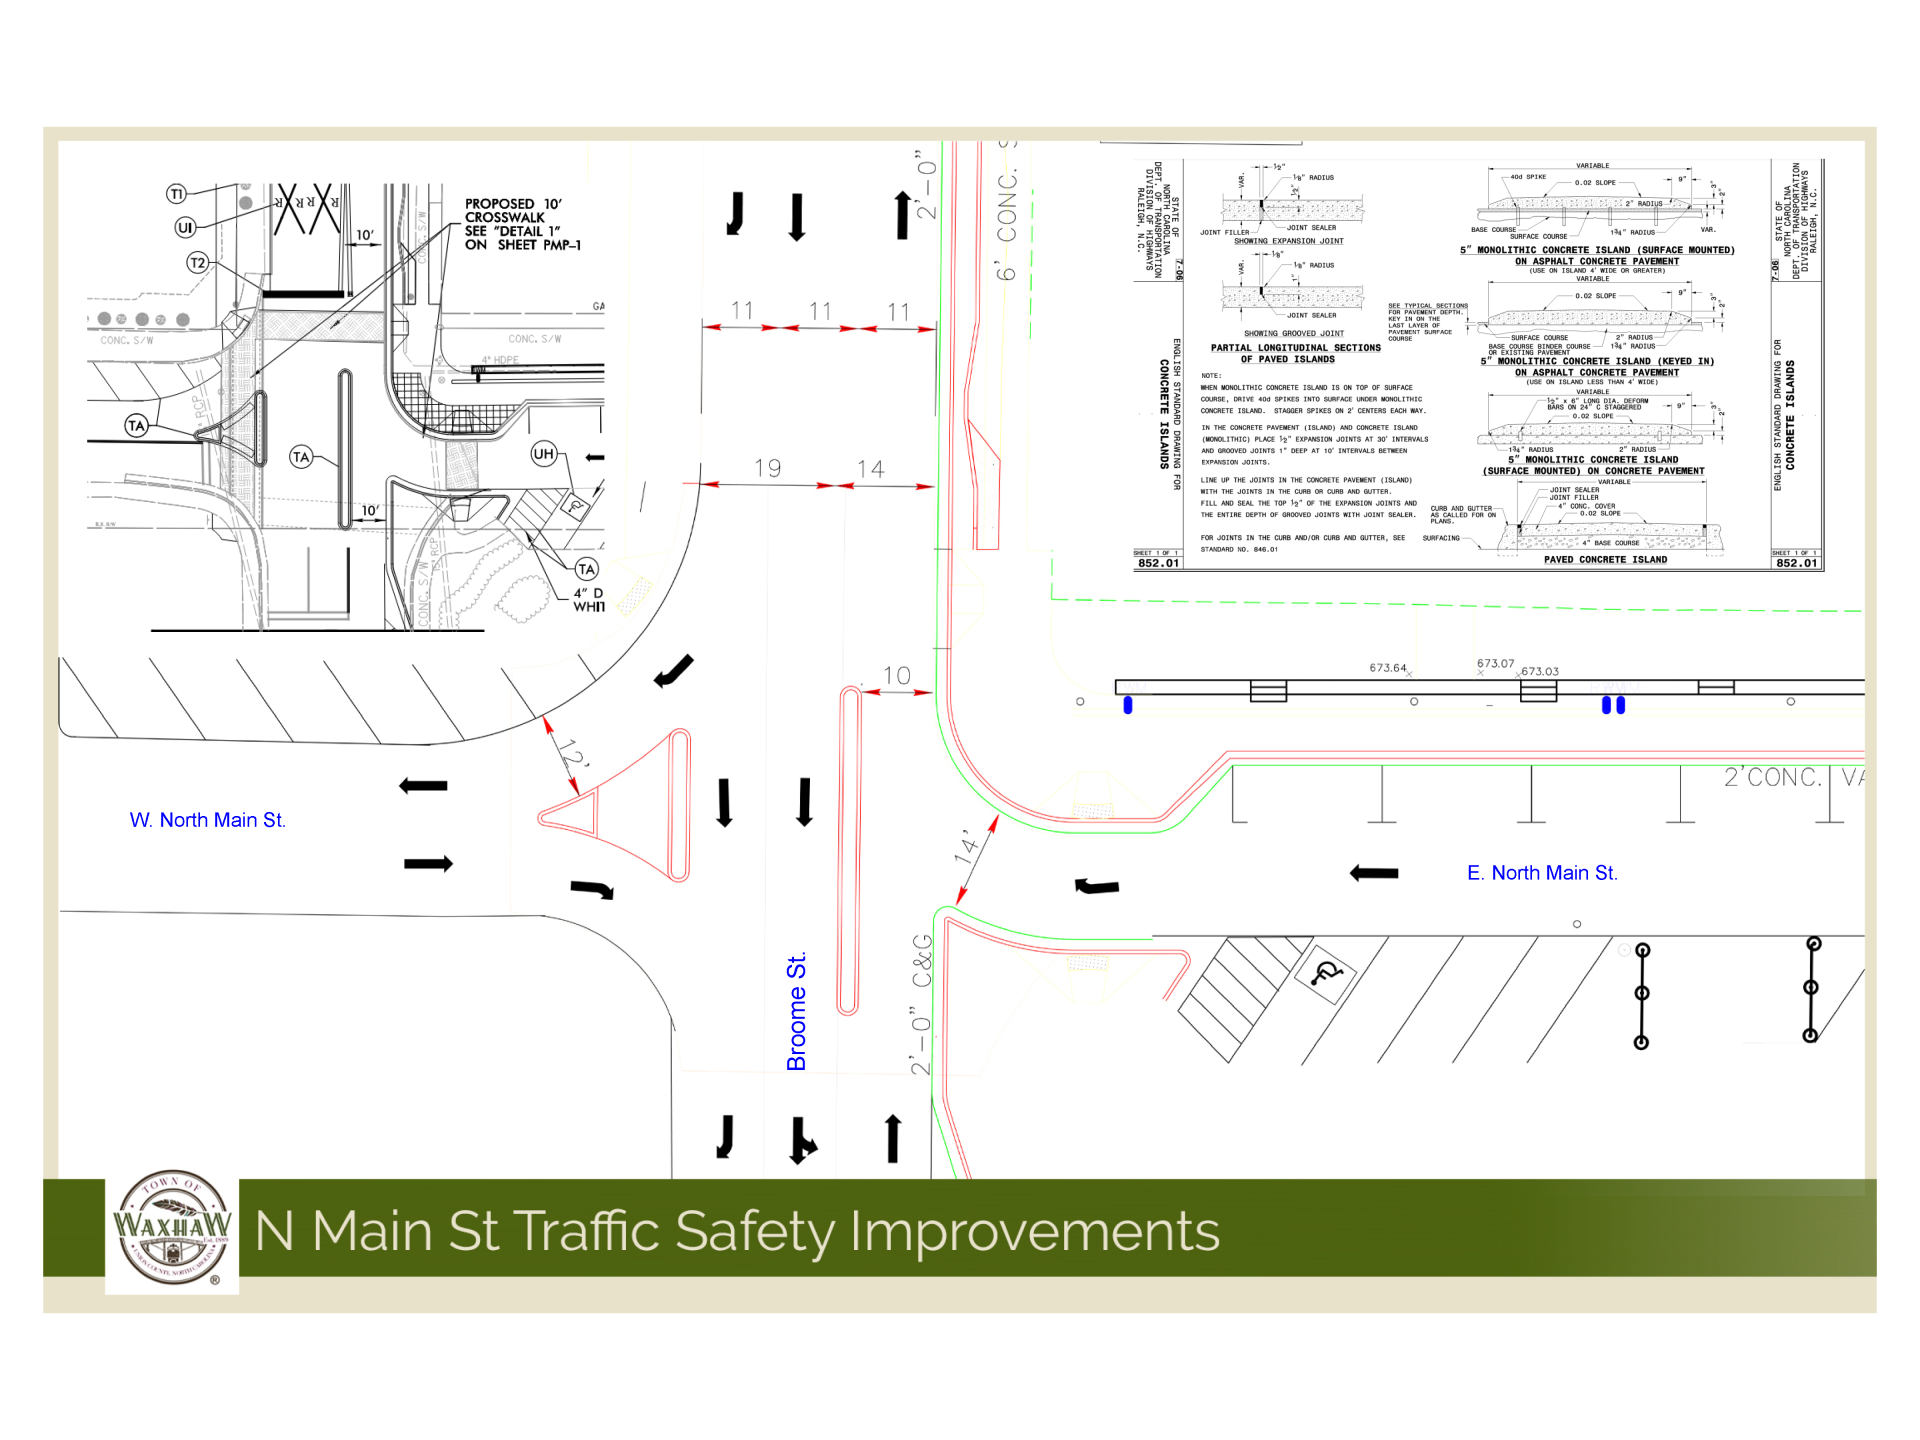 N Main St Traffic Safety Improvements